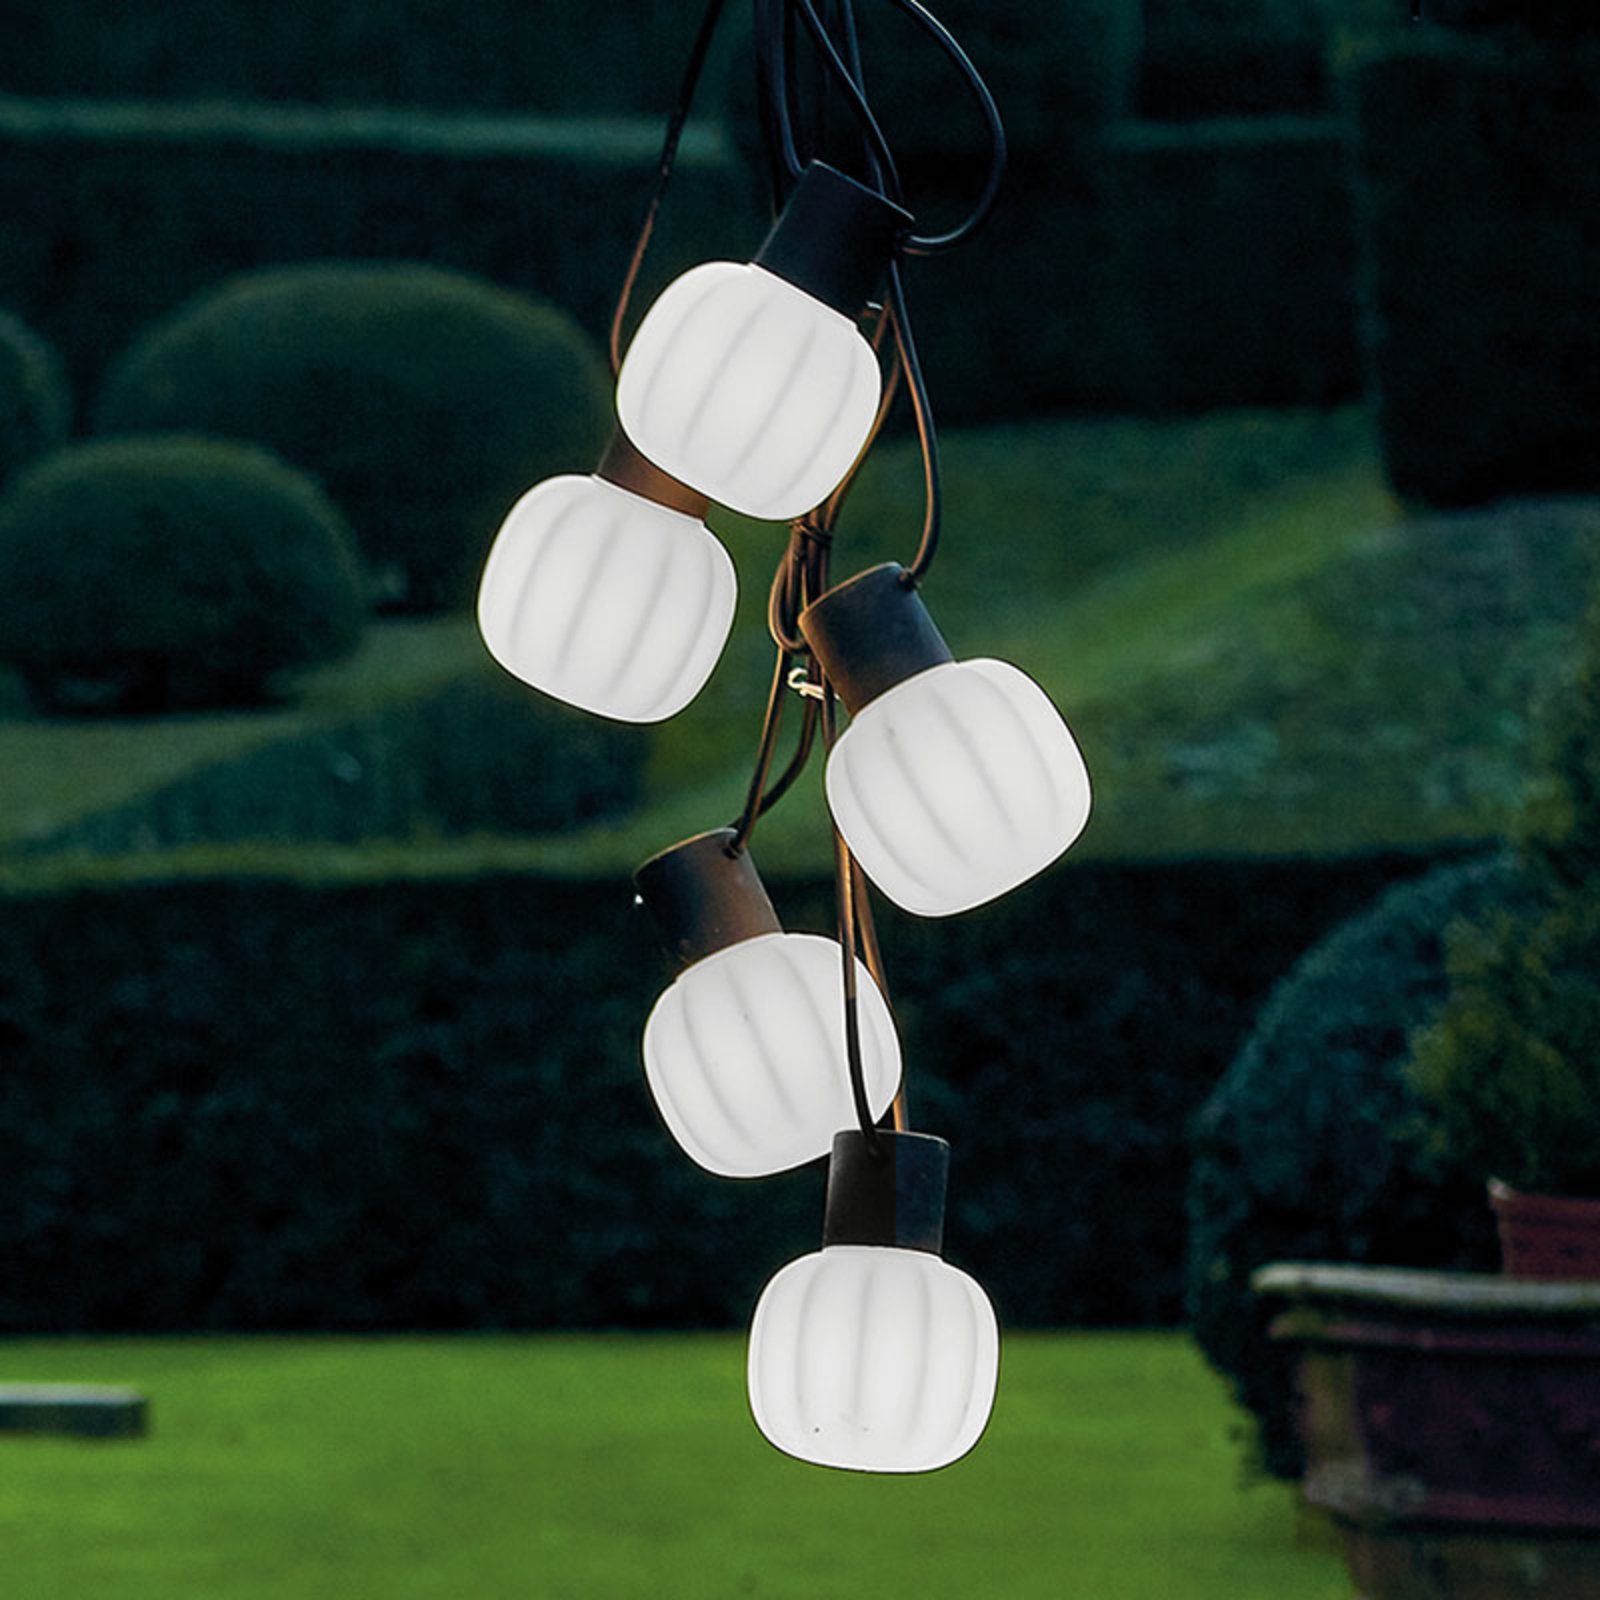 Martinelli Luce Kiki outdoor string lights 5-bulb